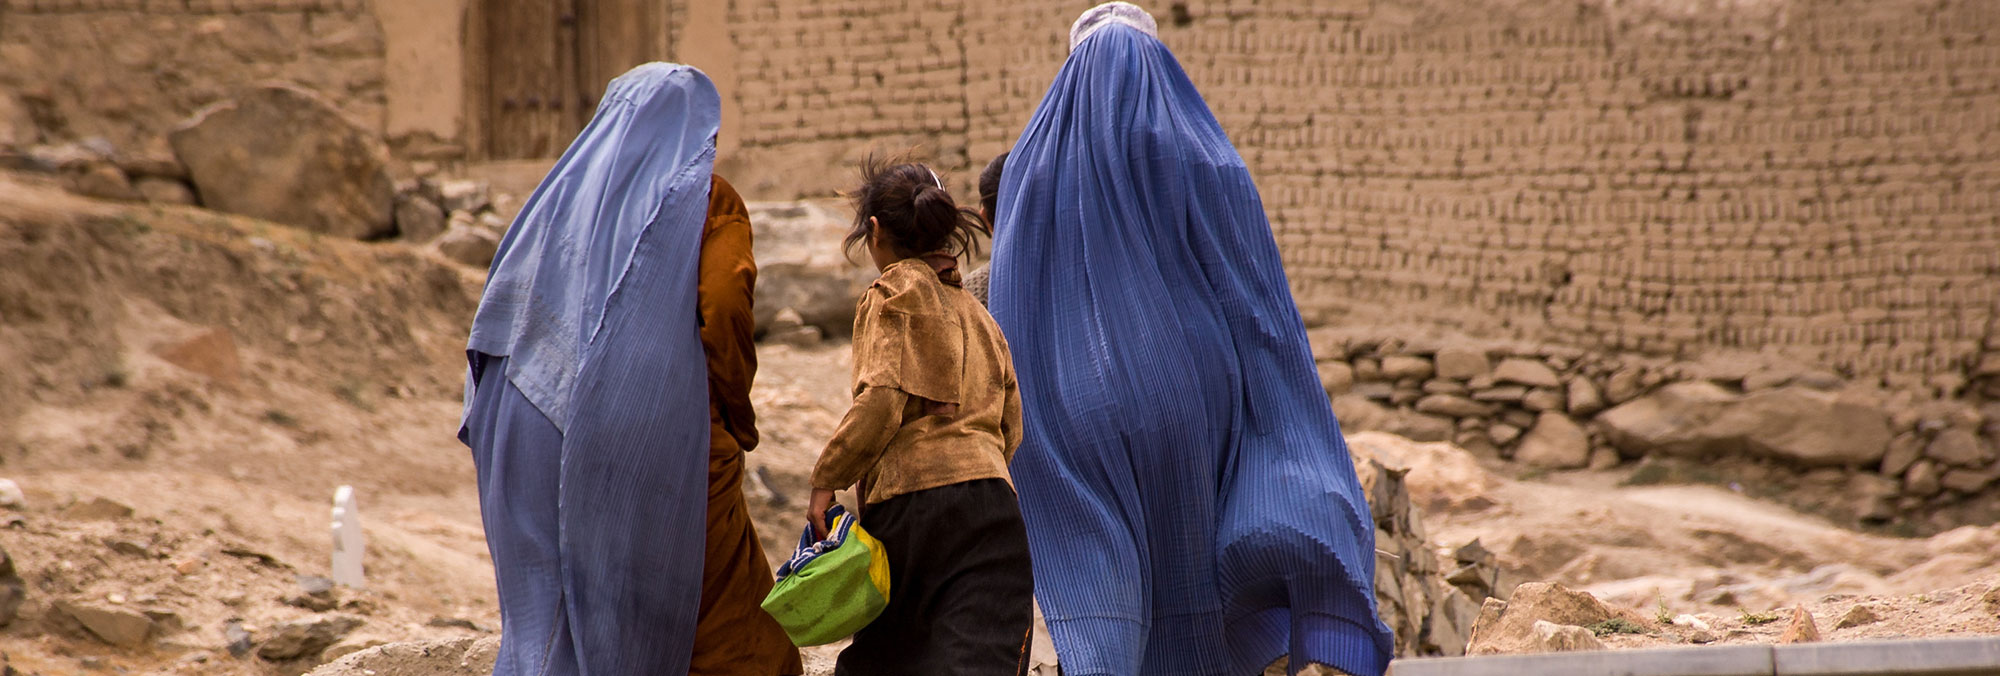 donne_afghane